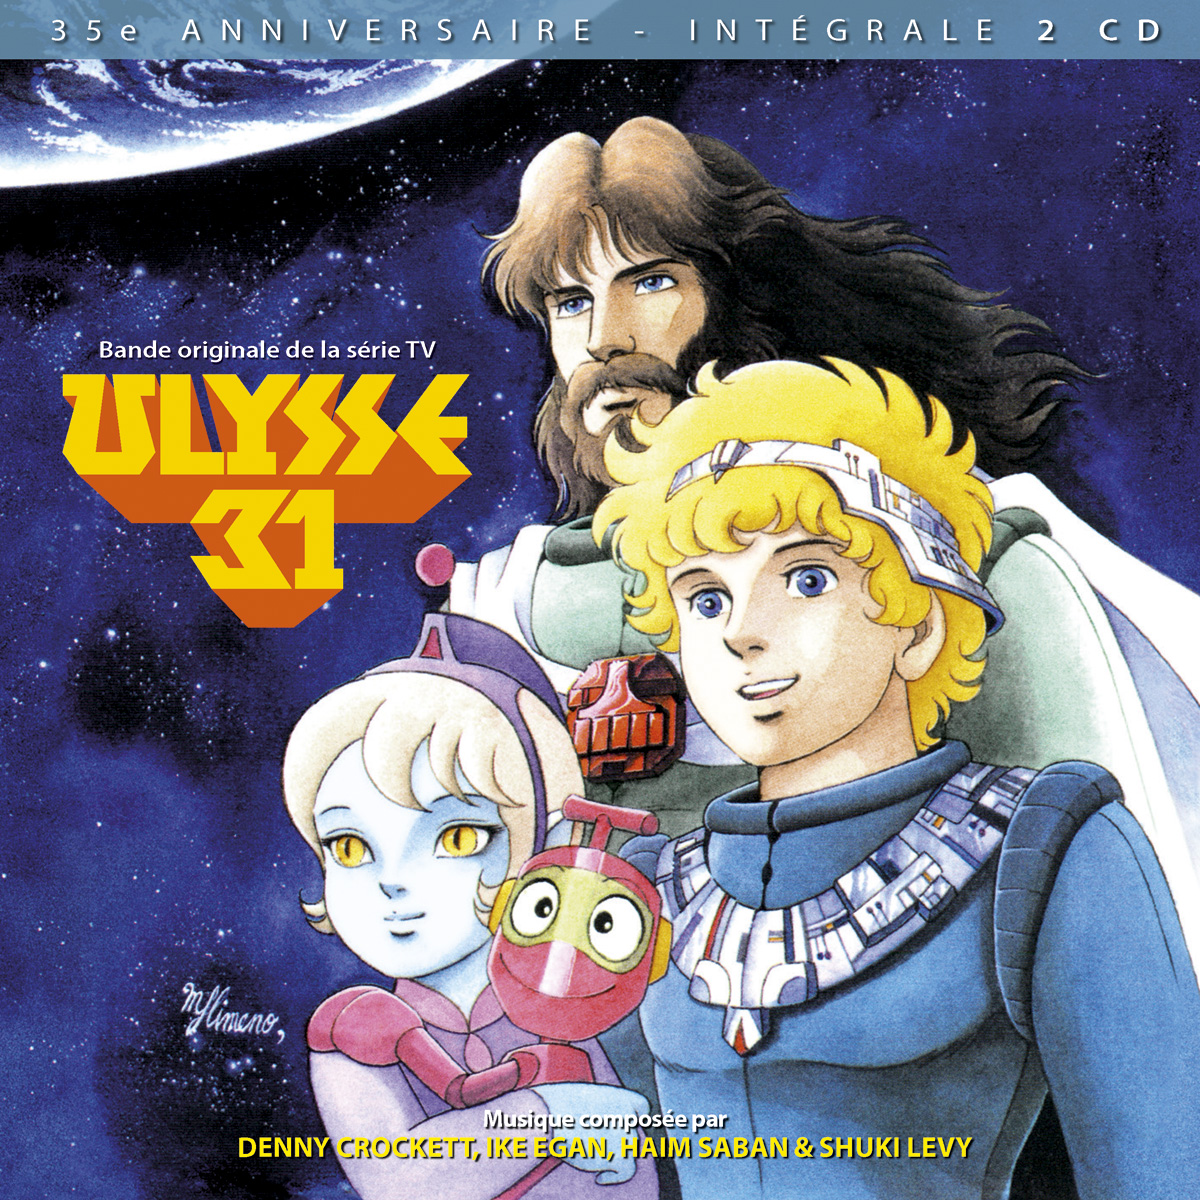 Release “Ulysse 31 – Bande originale de la série TV (intégrale 2 CD)” by  Denny Crockett, Ike Egan, Shuki Levy, Haim Saban - Cover art - MusicBrainz